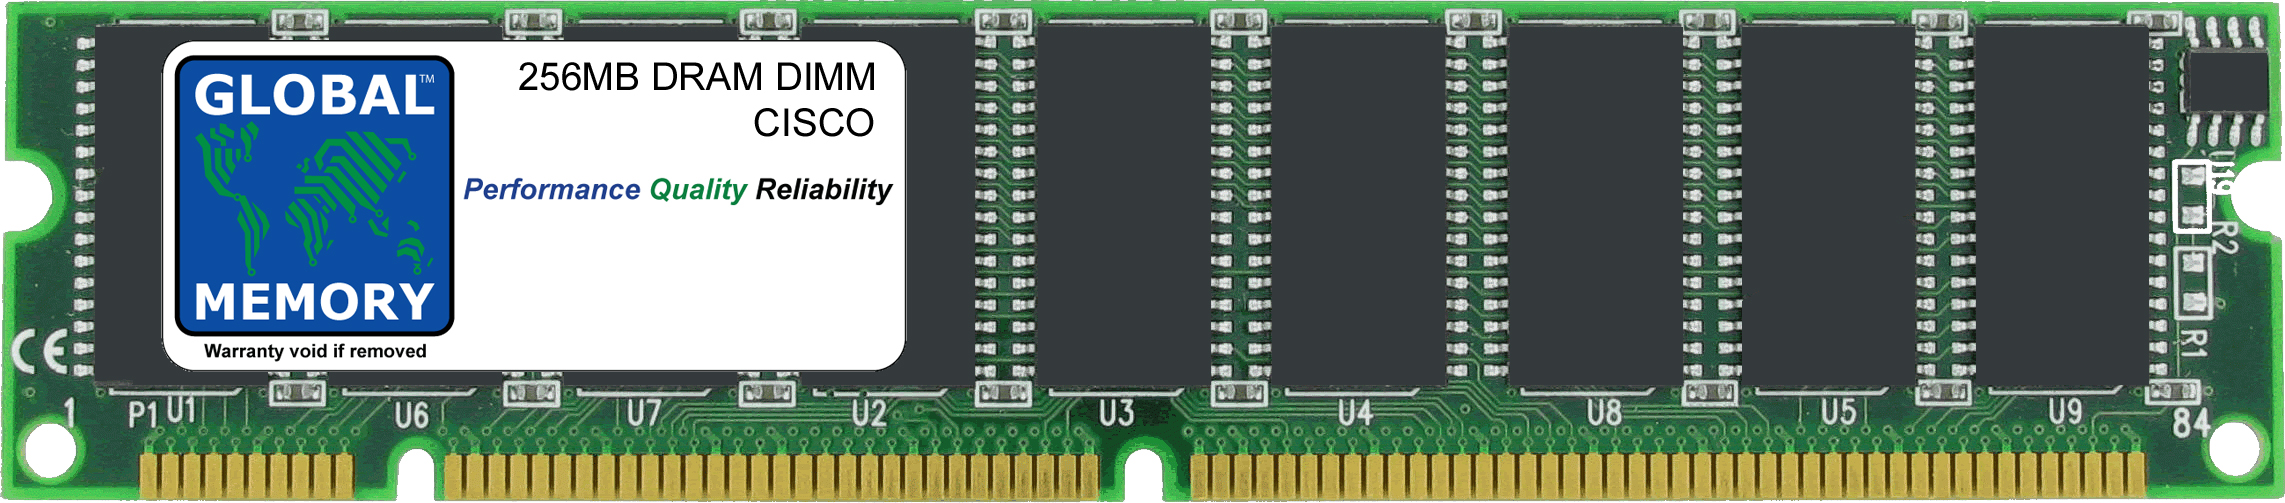 256MB DRAM DIMM MEMORY RAM FOR CISCO AS5350 UNIVERSAL GATEWAY (MEM-256M-AS535)